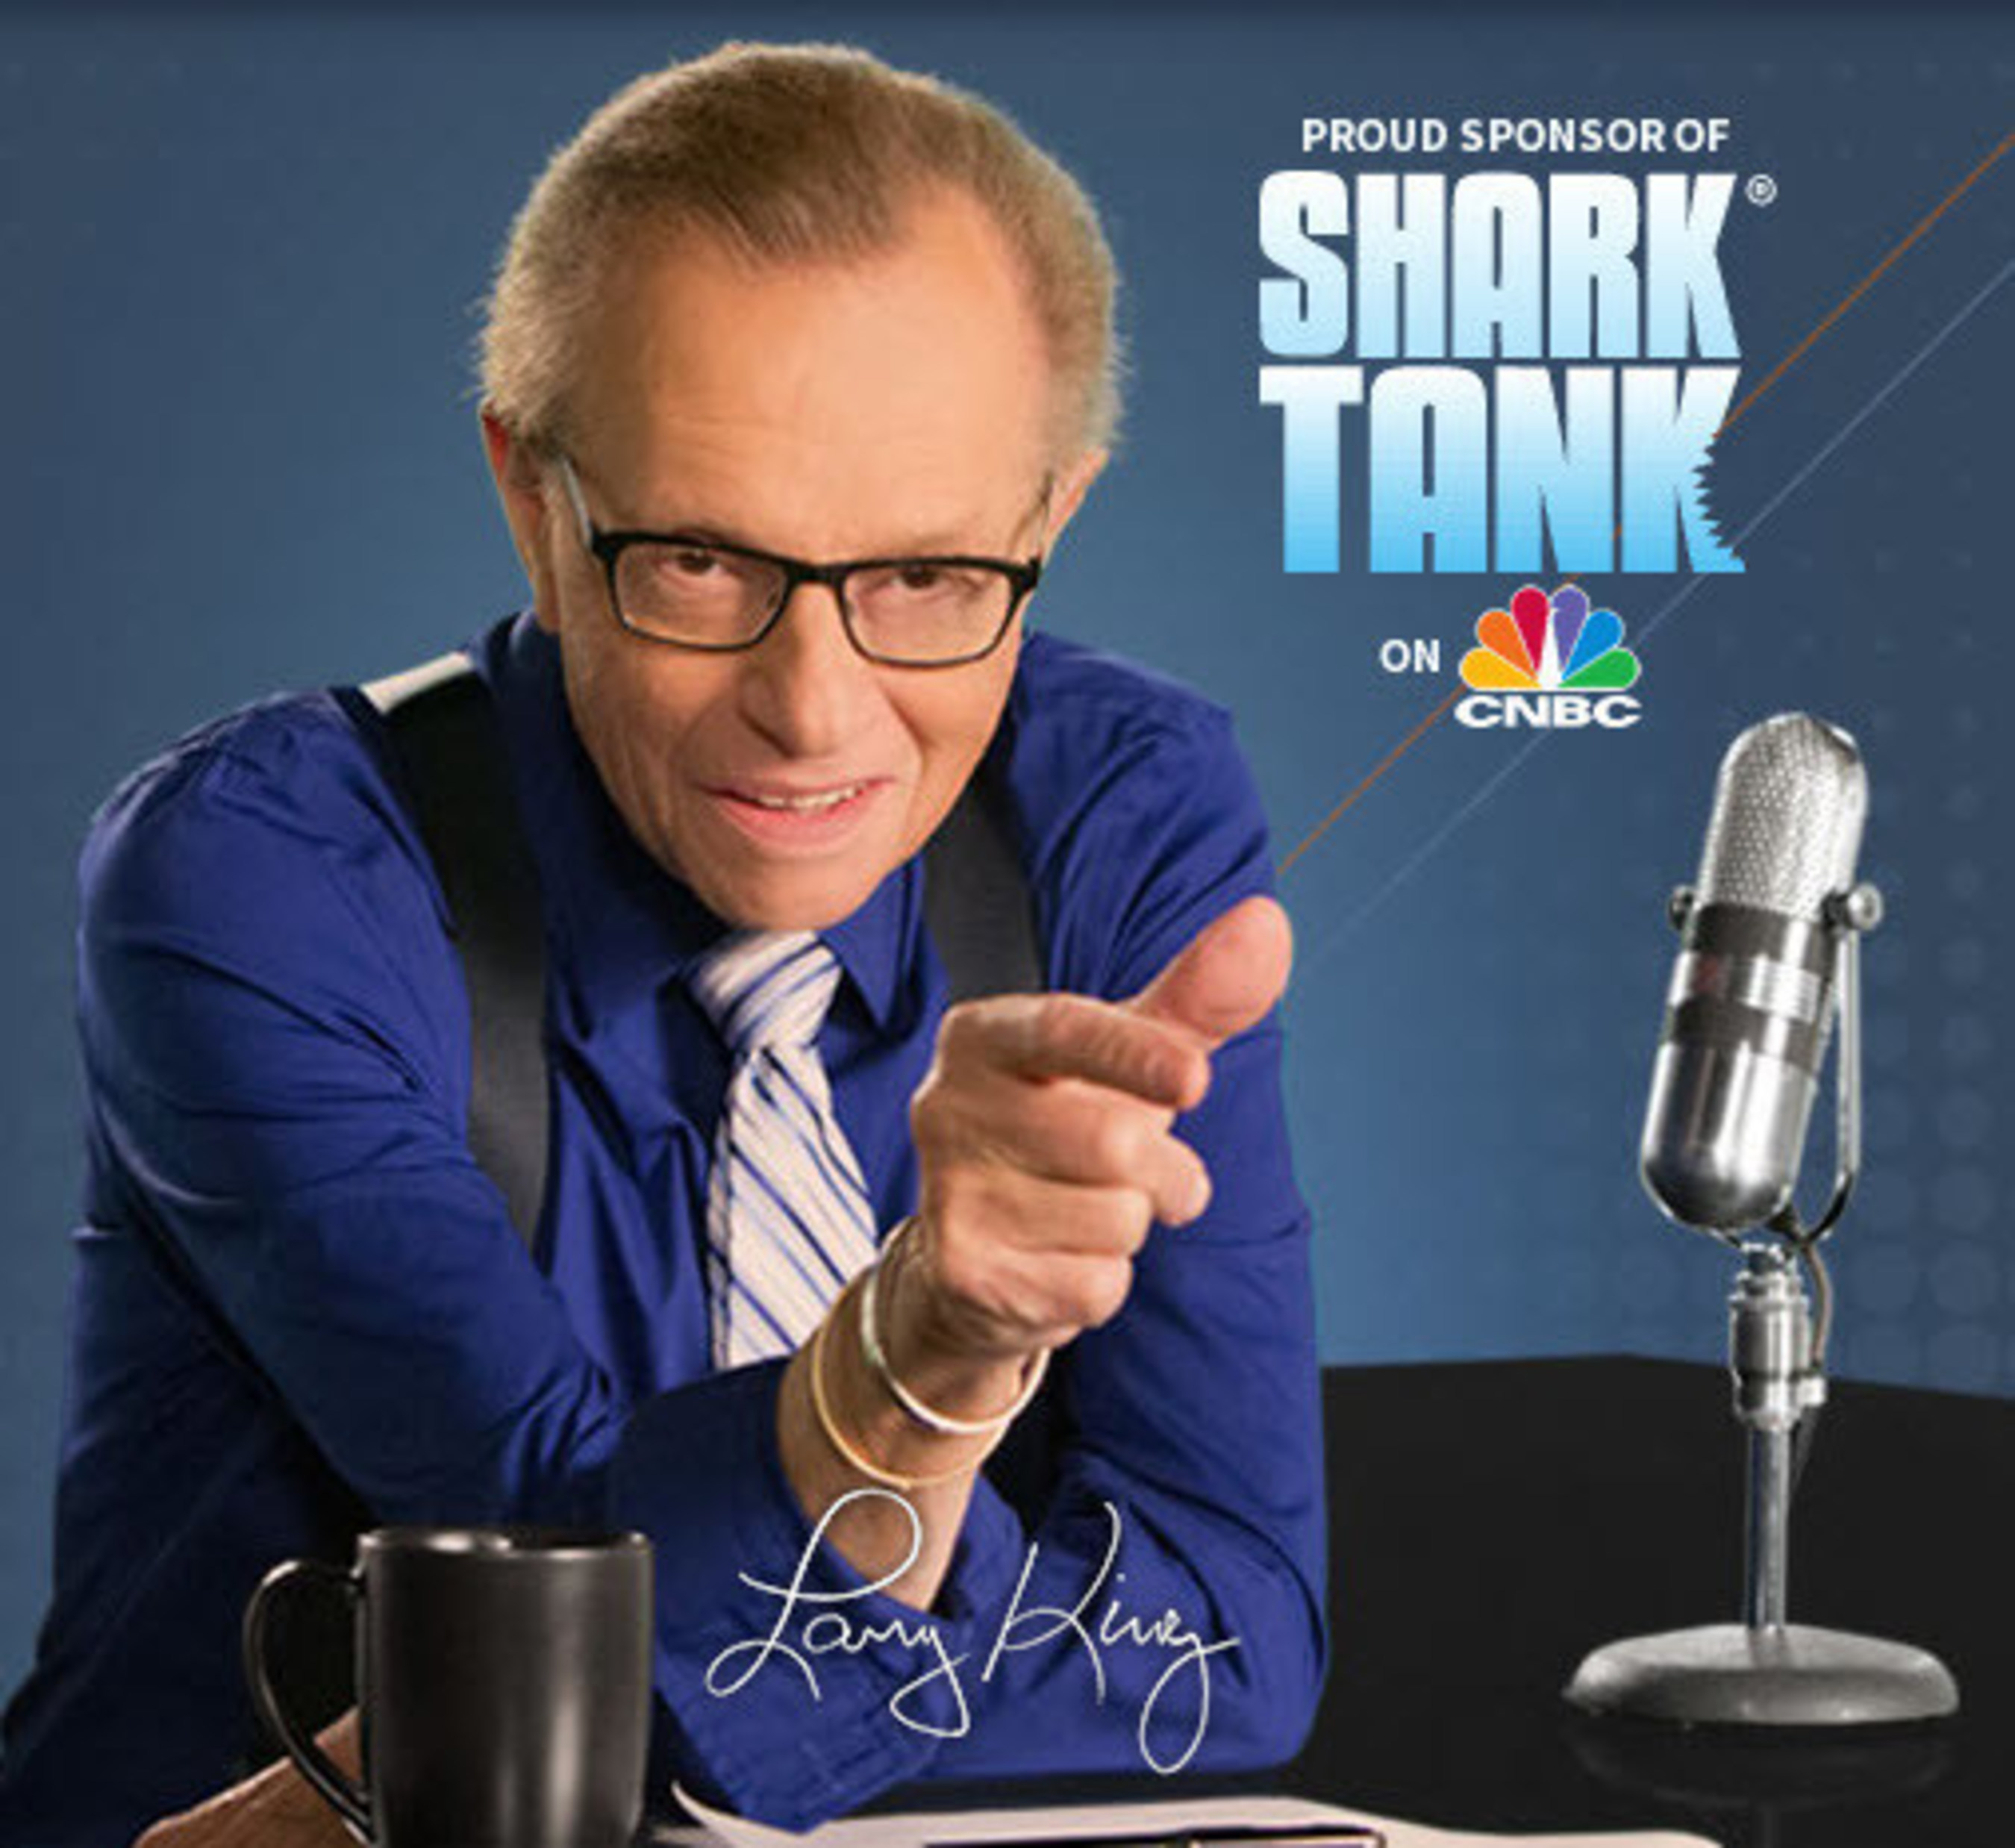 LendVantage Joins Shark Tank on CNBC as Presenting Sponsor